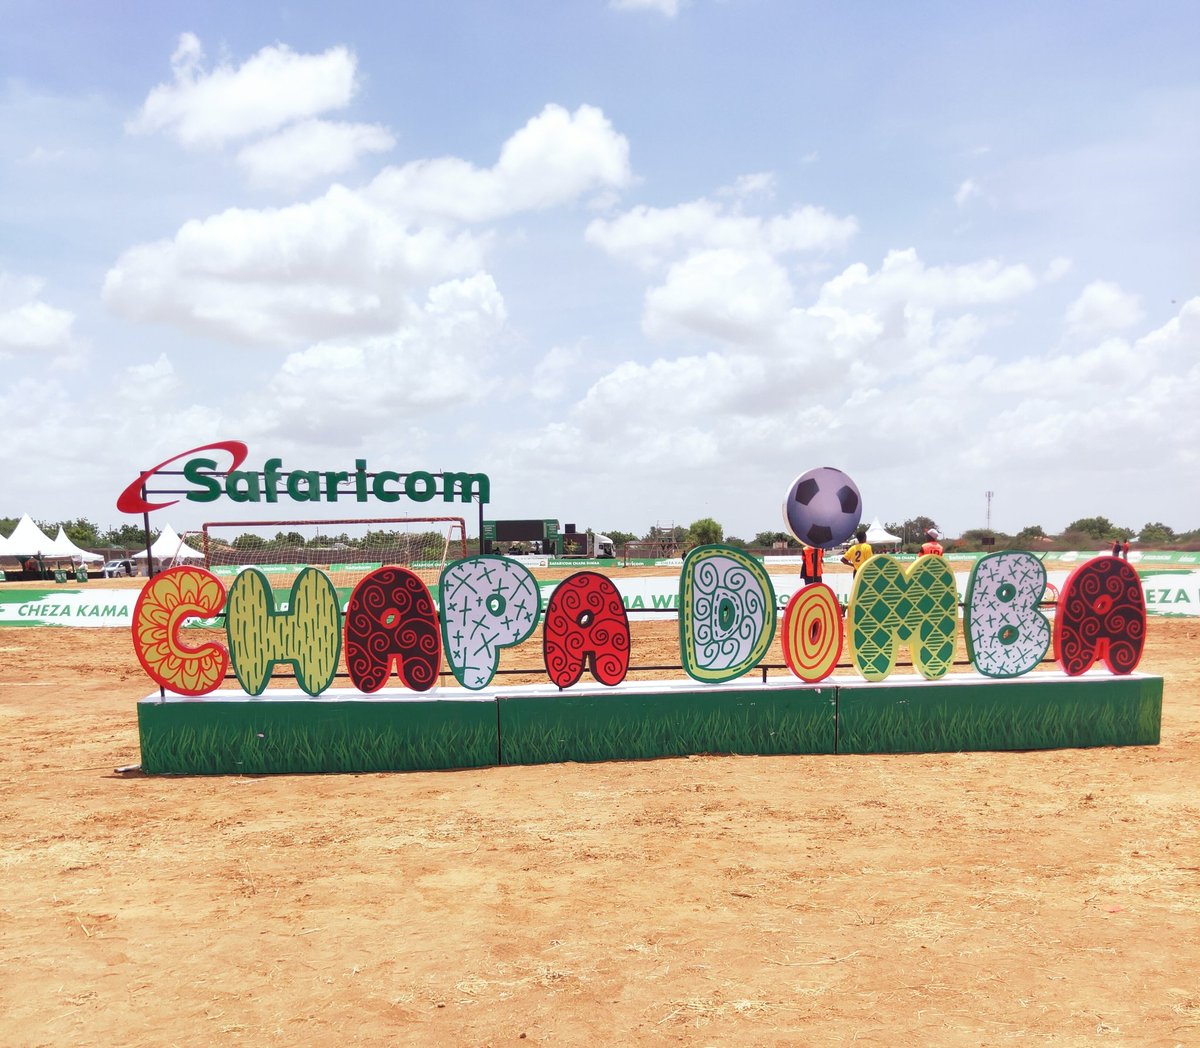 Safaricom Chapa dimba finals North Eastern region at Garissa university grounds
Wajir all stars vs Lyon fc (Garissa) 
#Safaricomchapadimba #safaricom